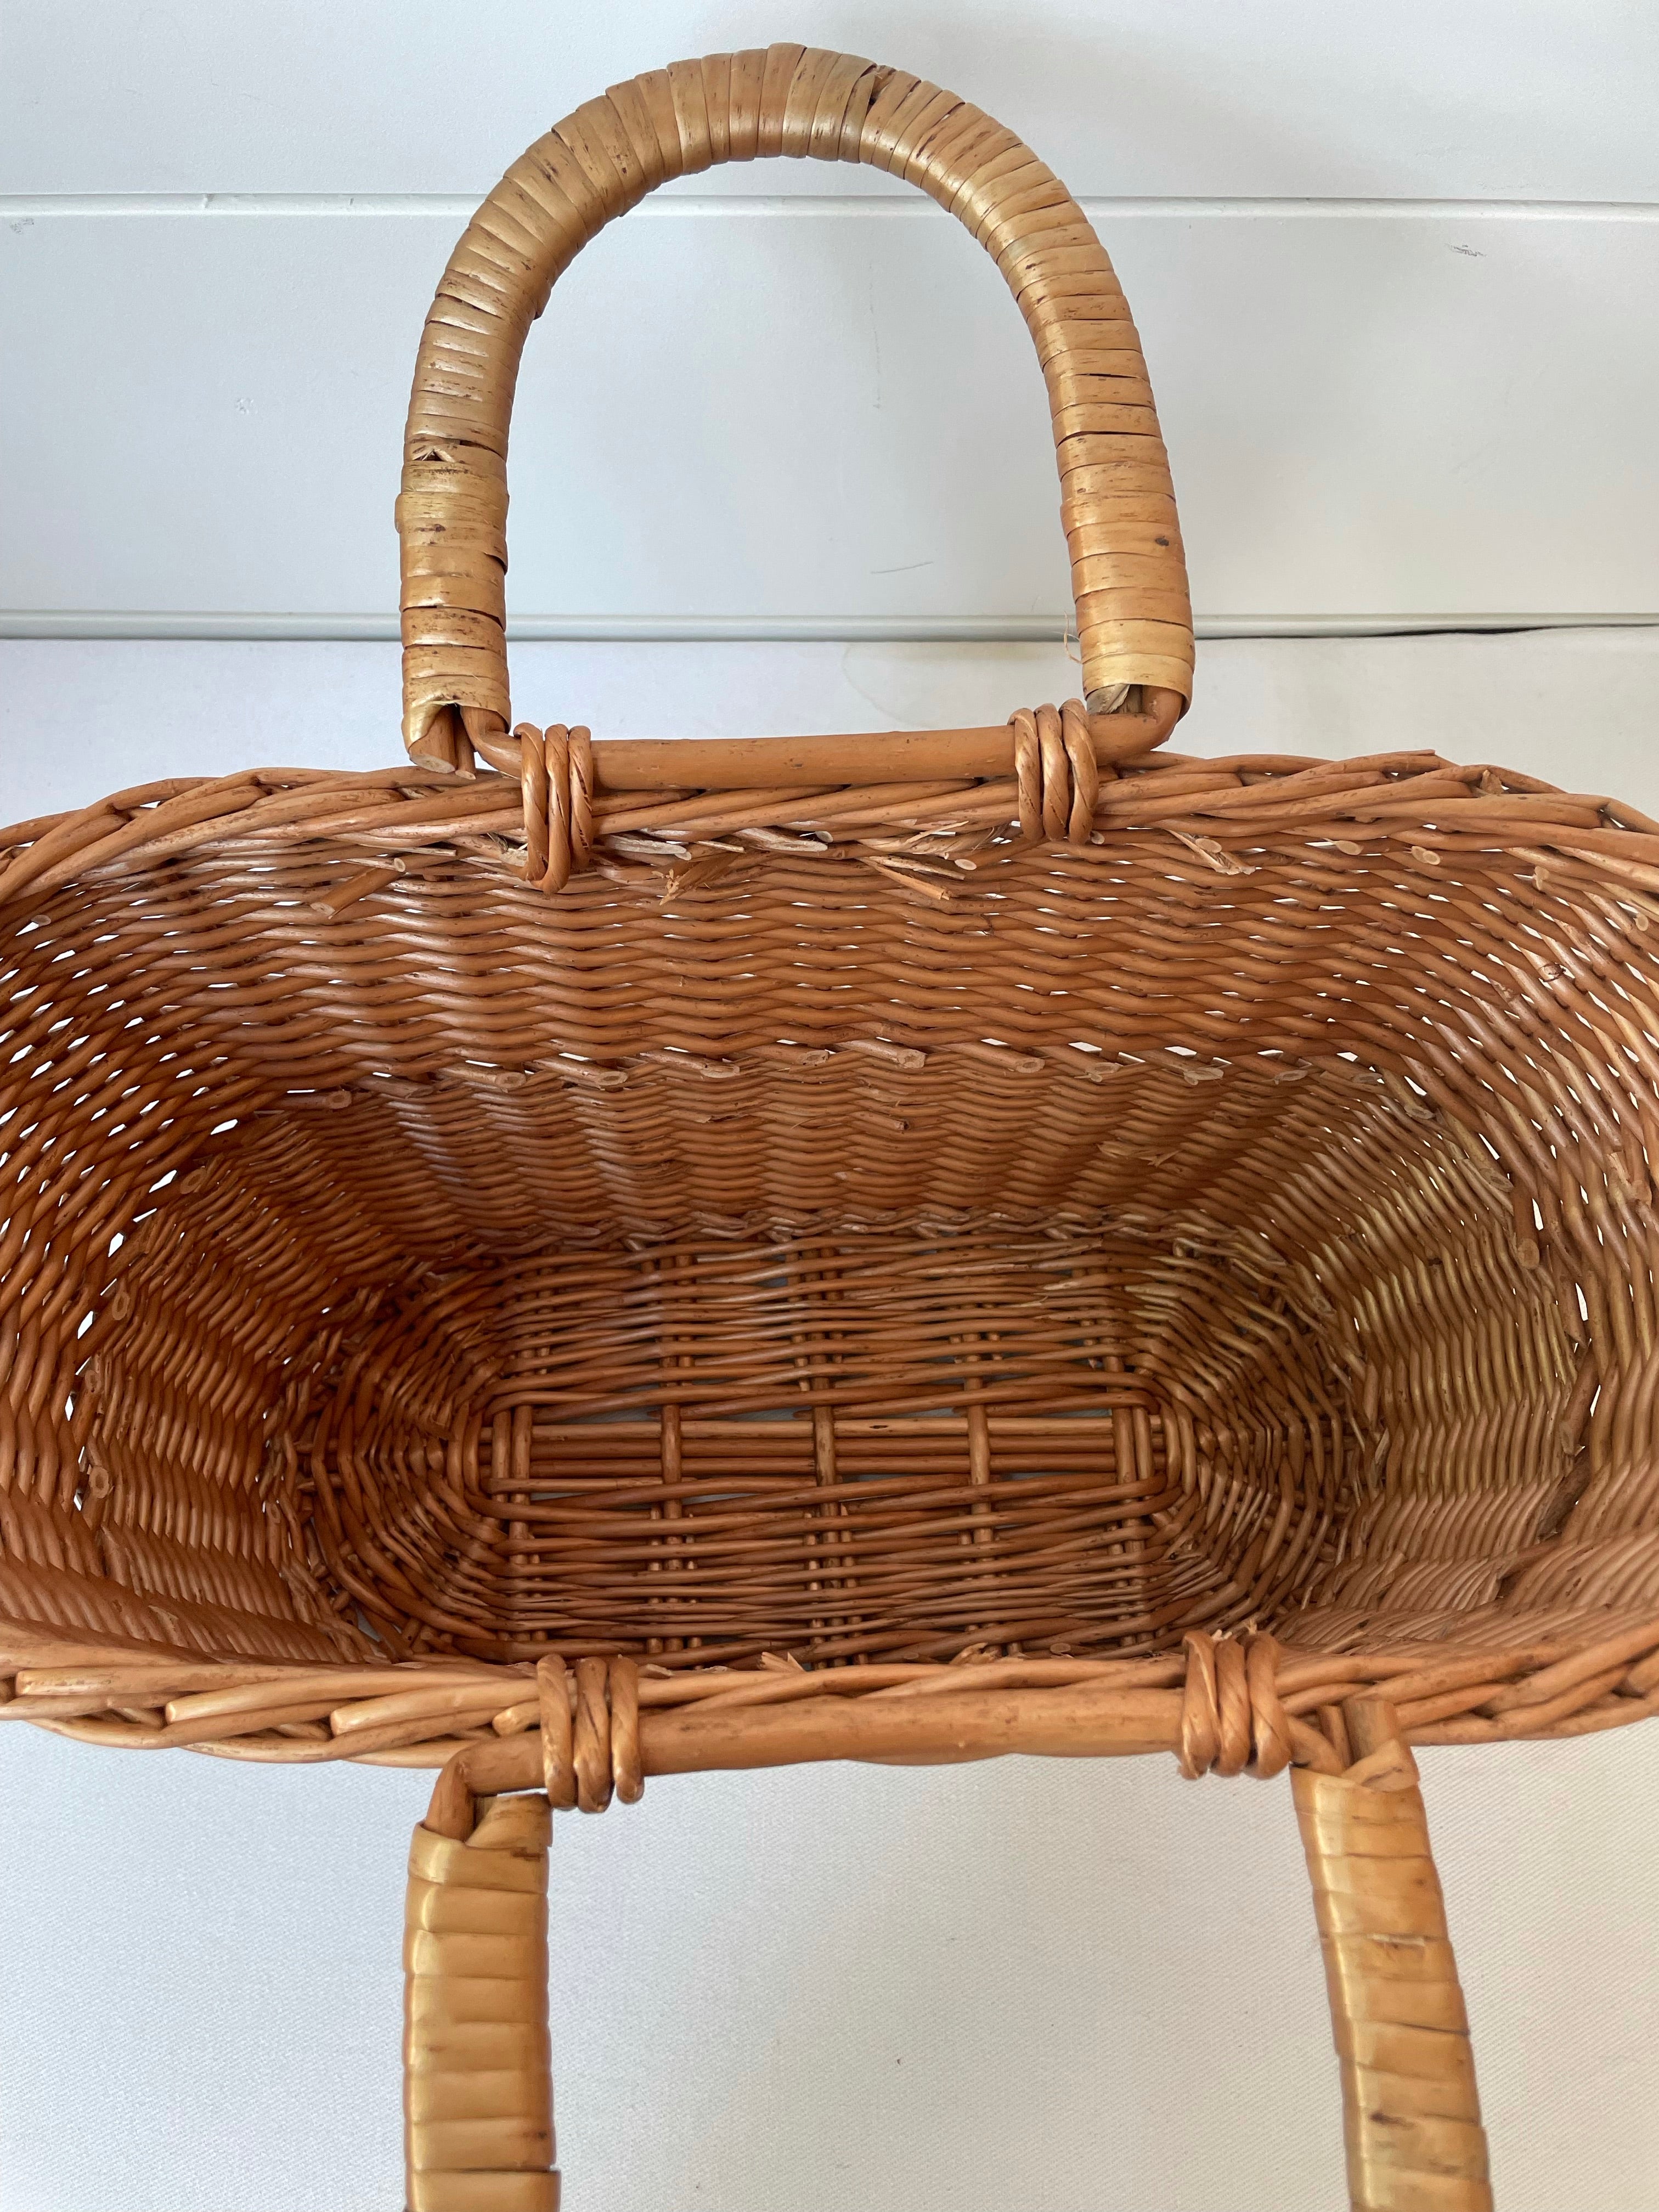 Hand Woven Basket Small Market Basket